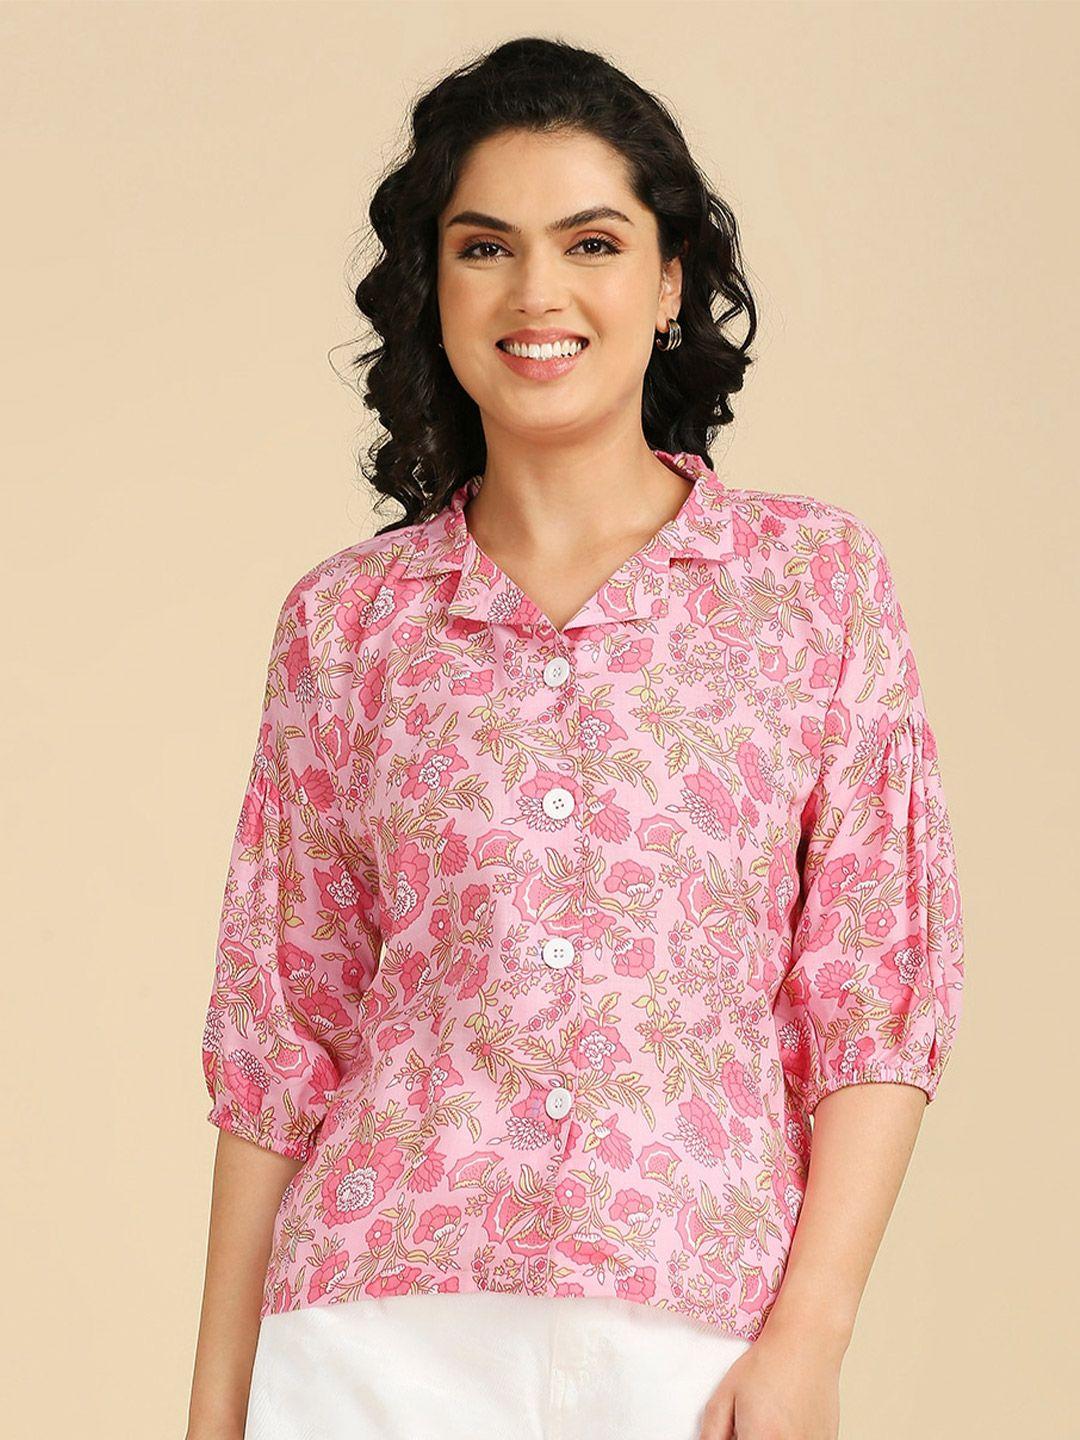 gufrina pink floral print cotton shirt style top